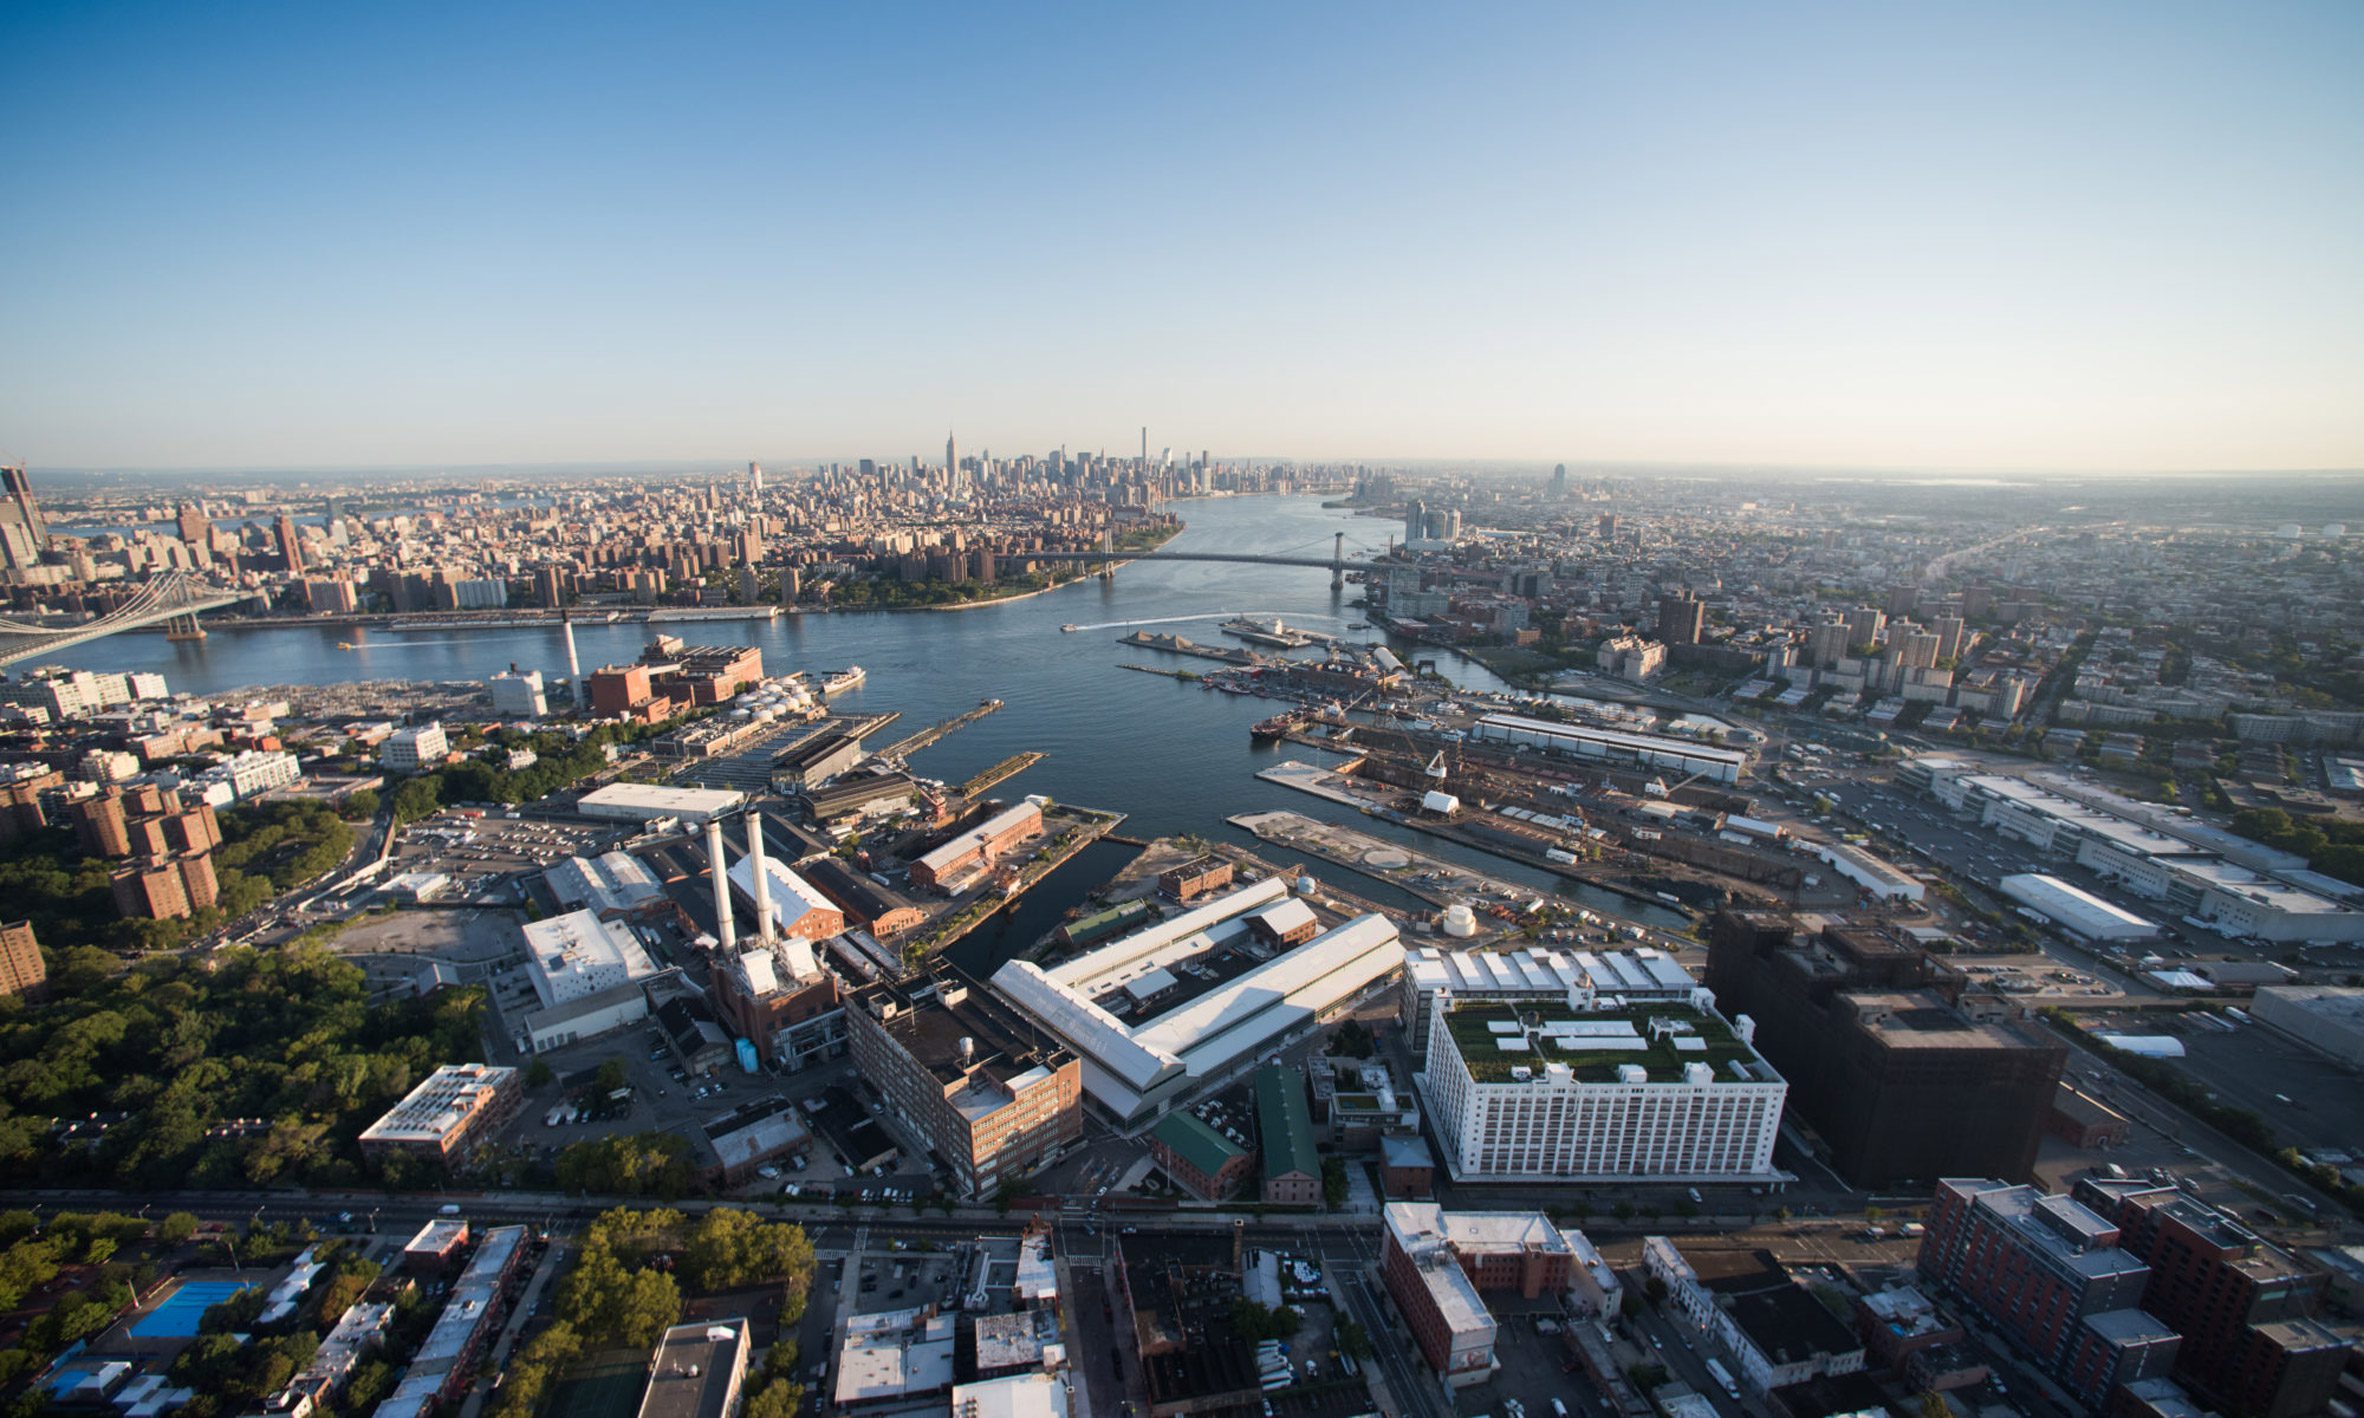 Brooklyn Navy Yard will use Smartworldpro to create a digital twin